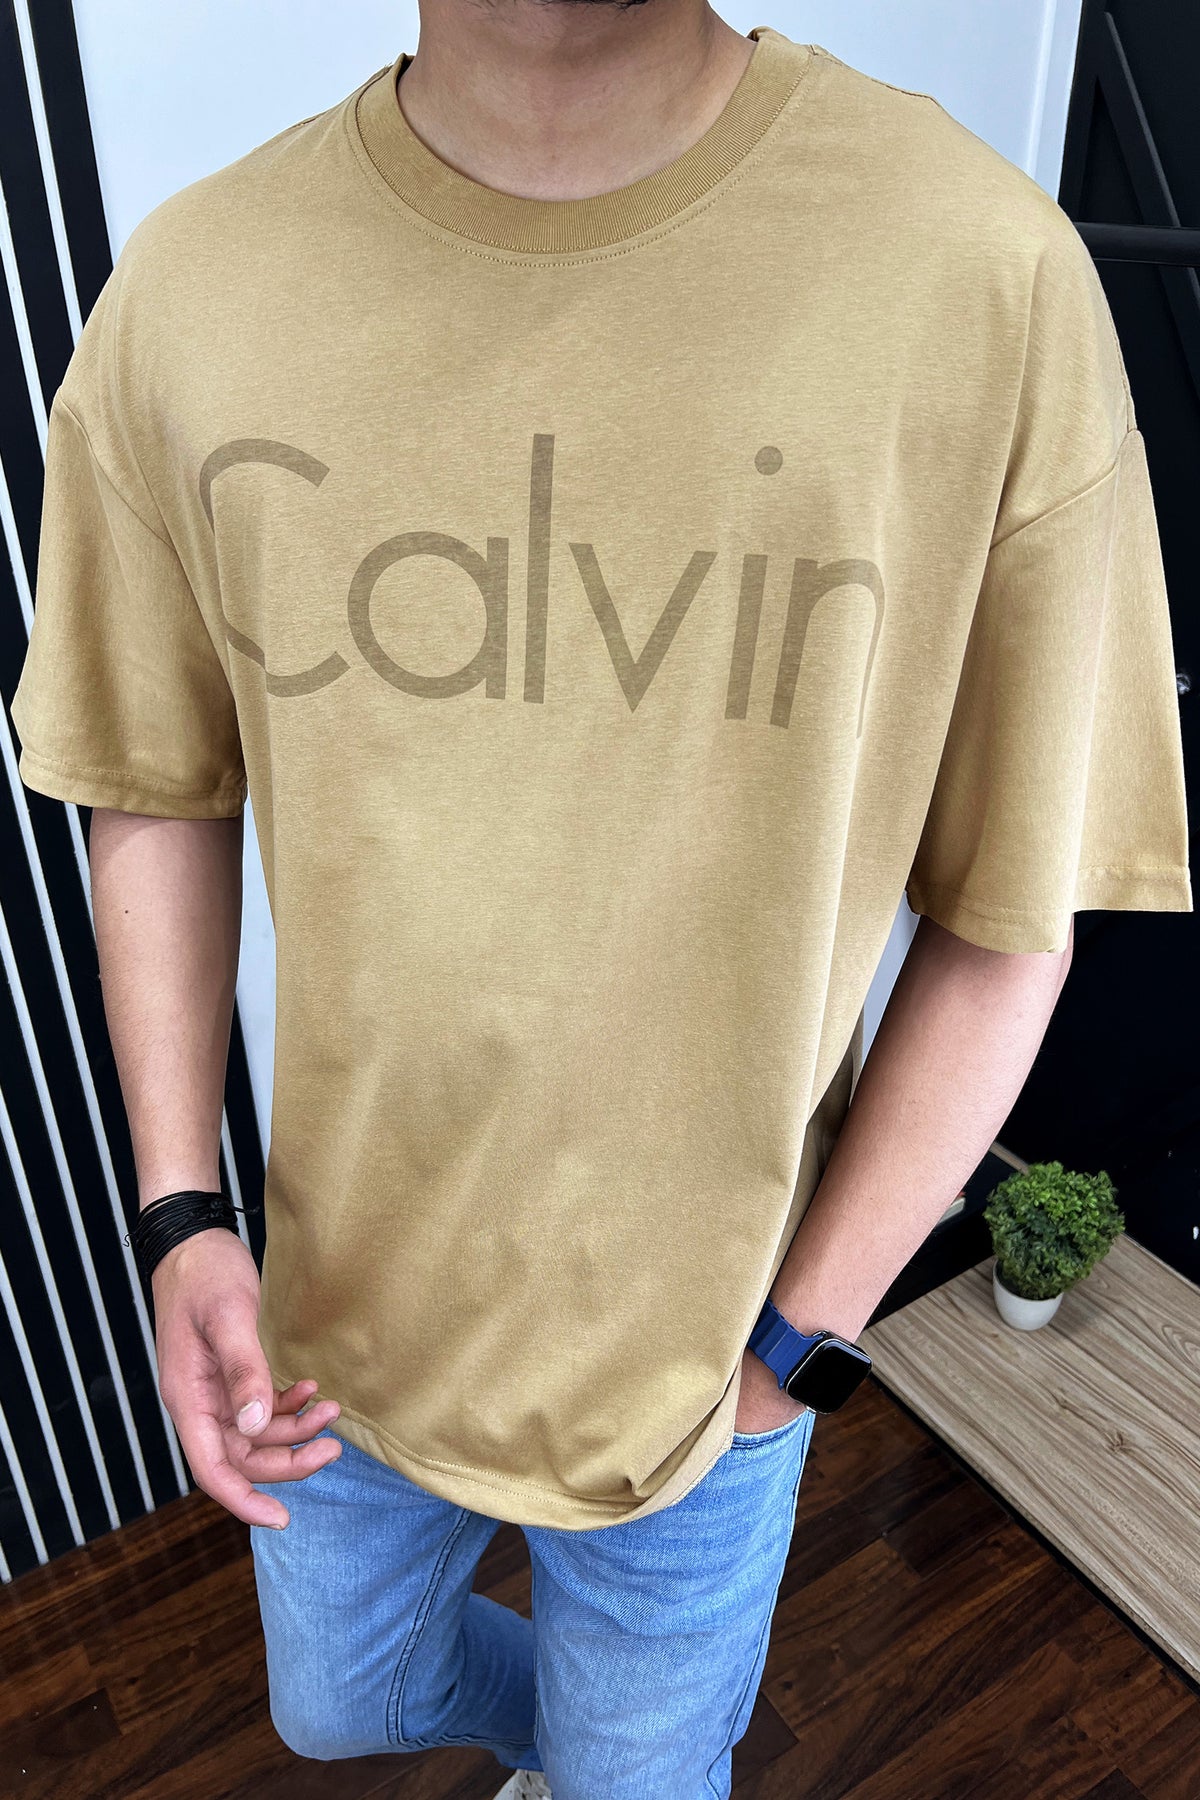 Calvn Front Slogan Oversized T-Shirt